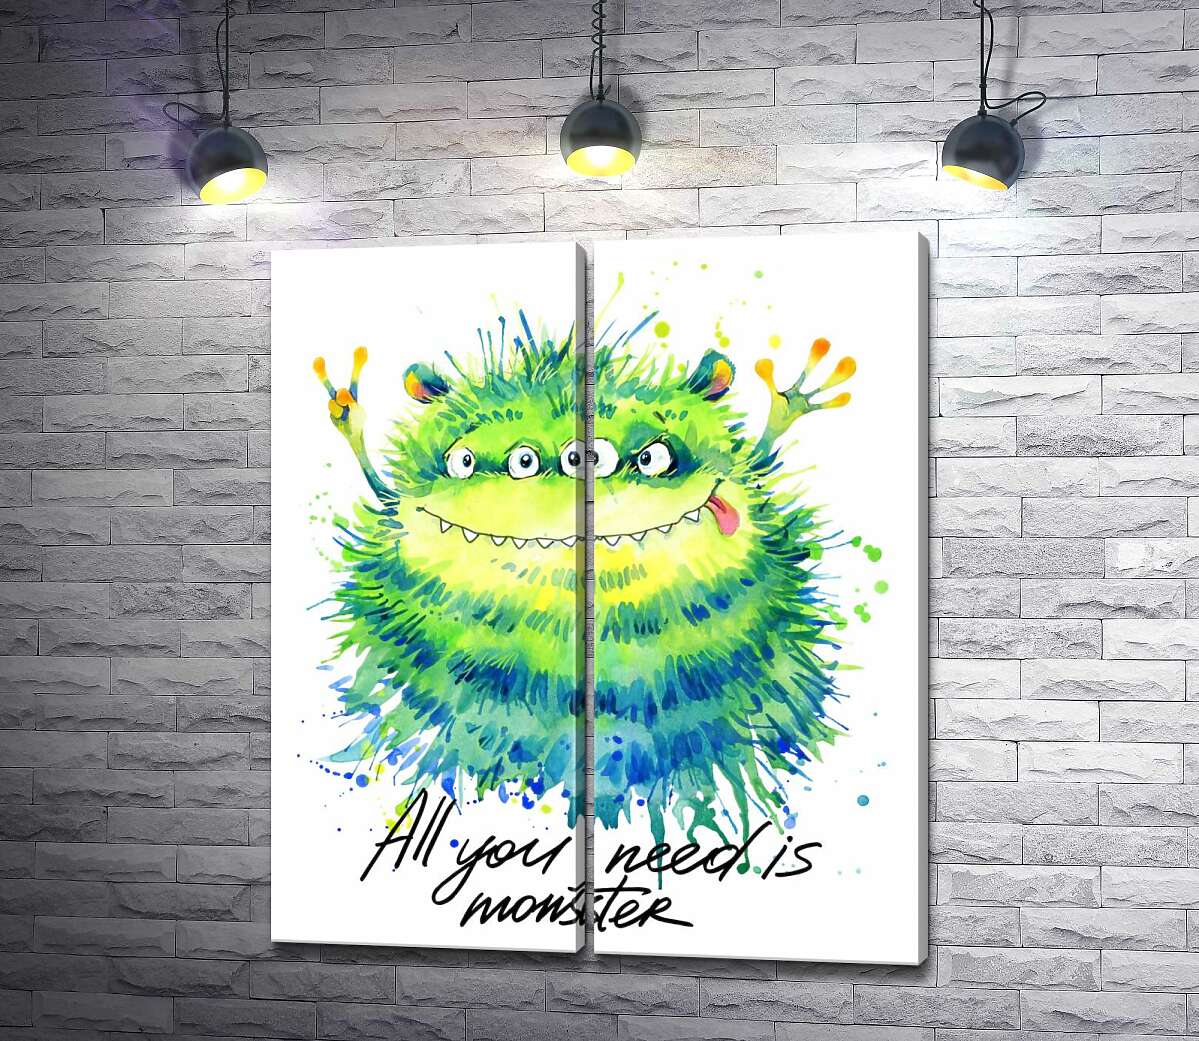 модульная картина Зеленый четырехглазый монстр с надписью "all you need is monster"